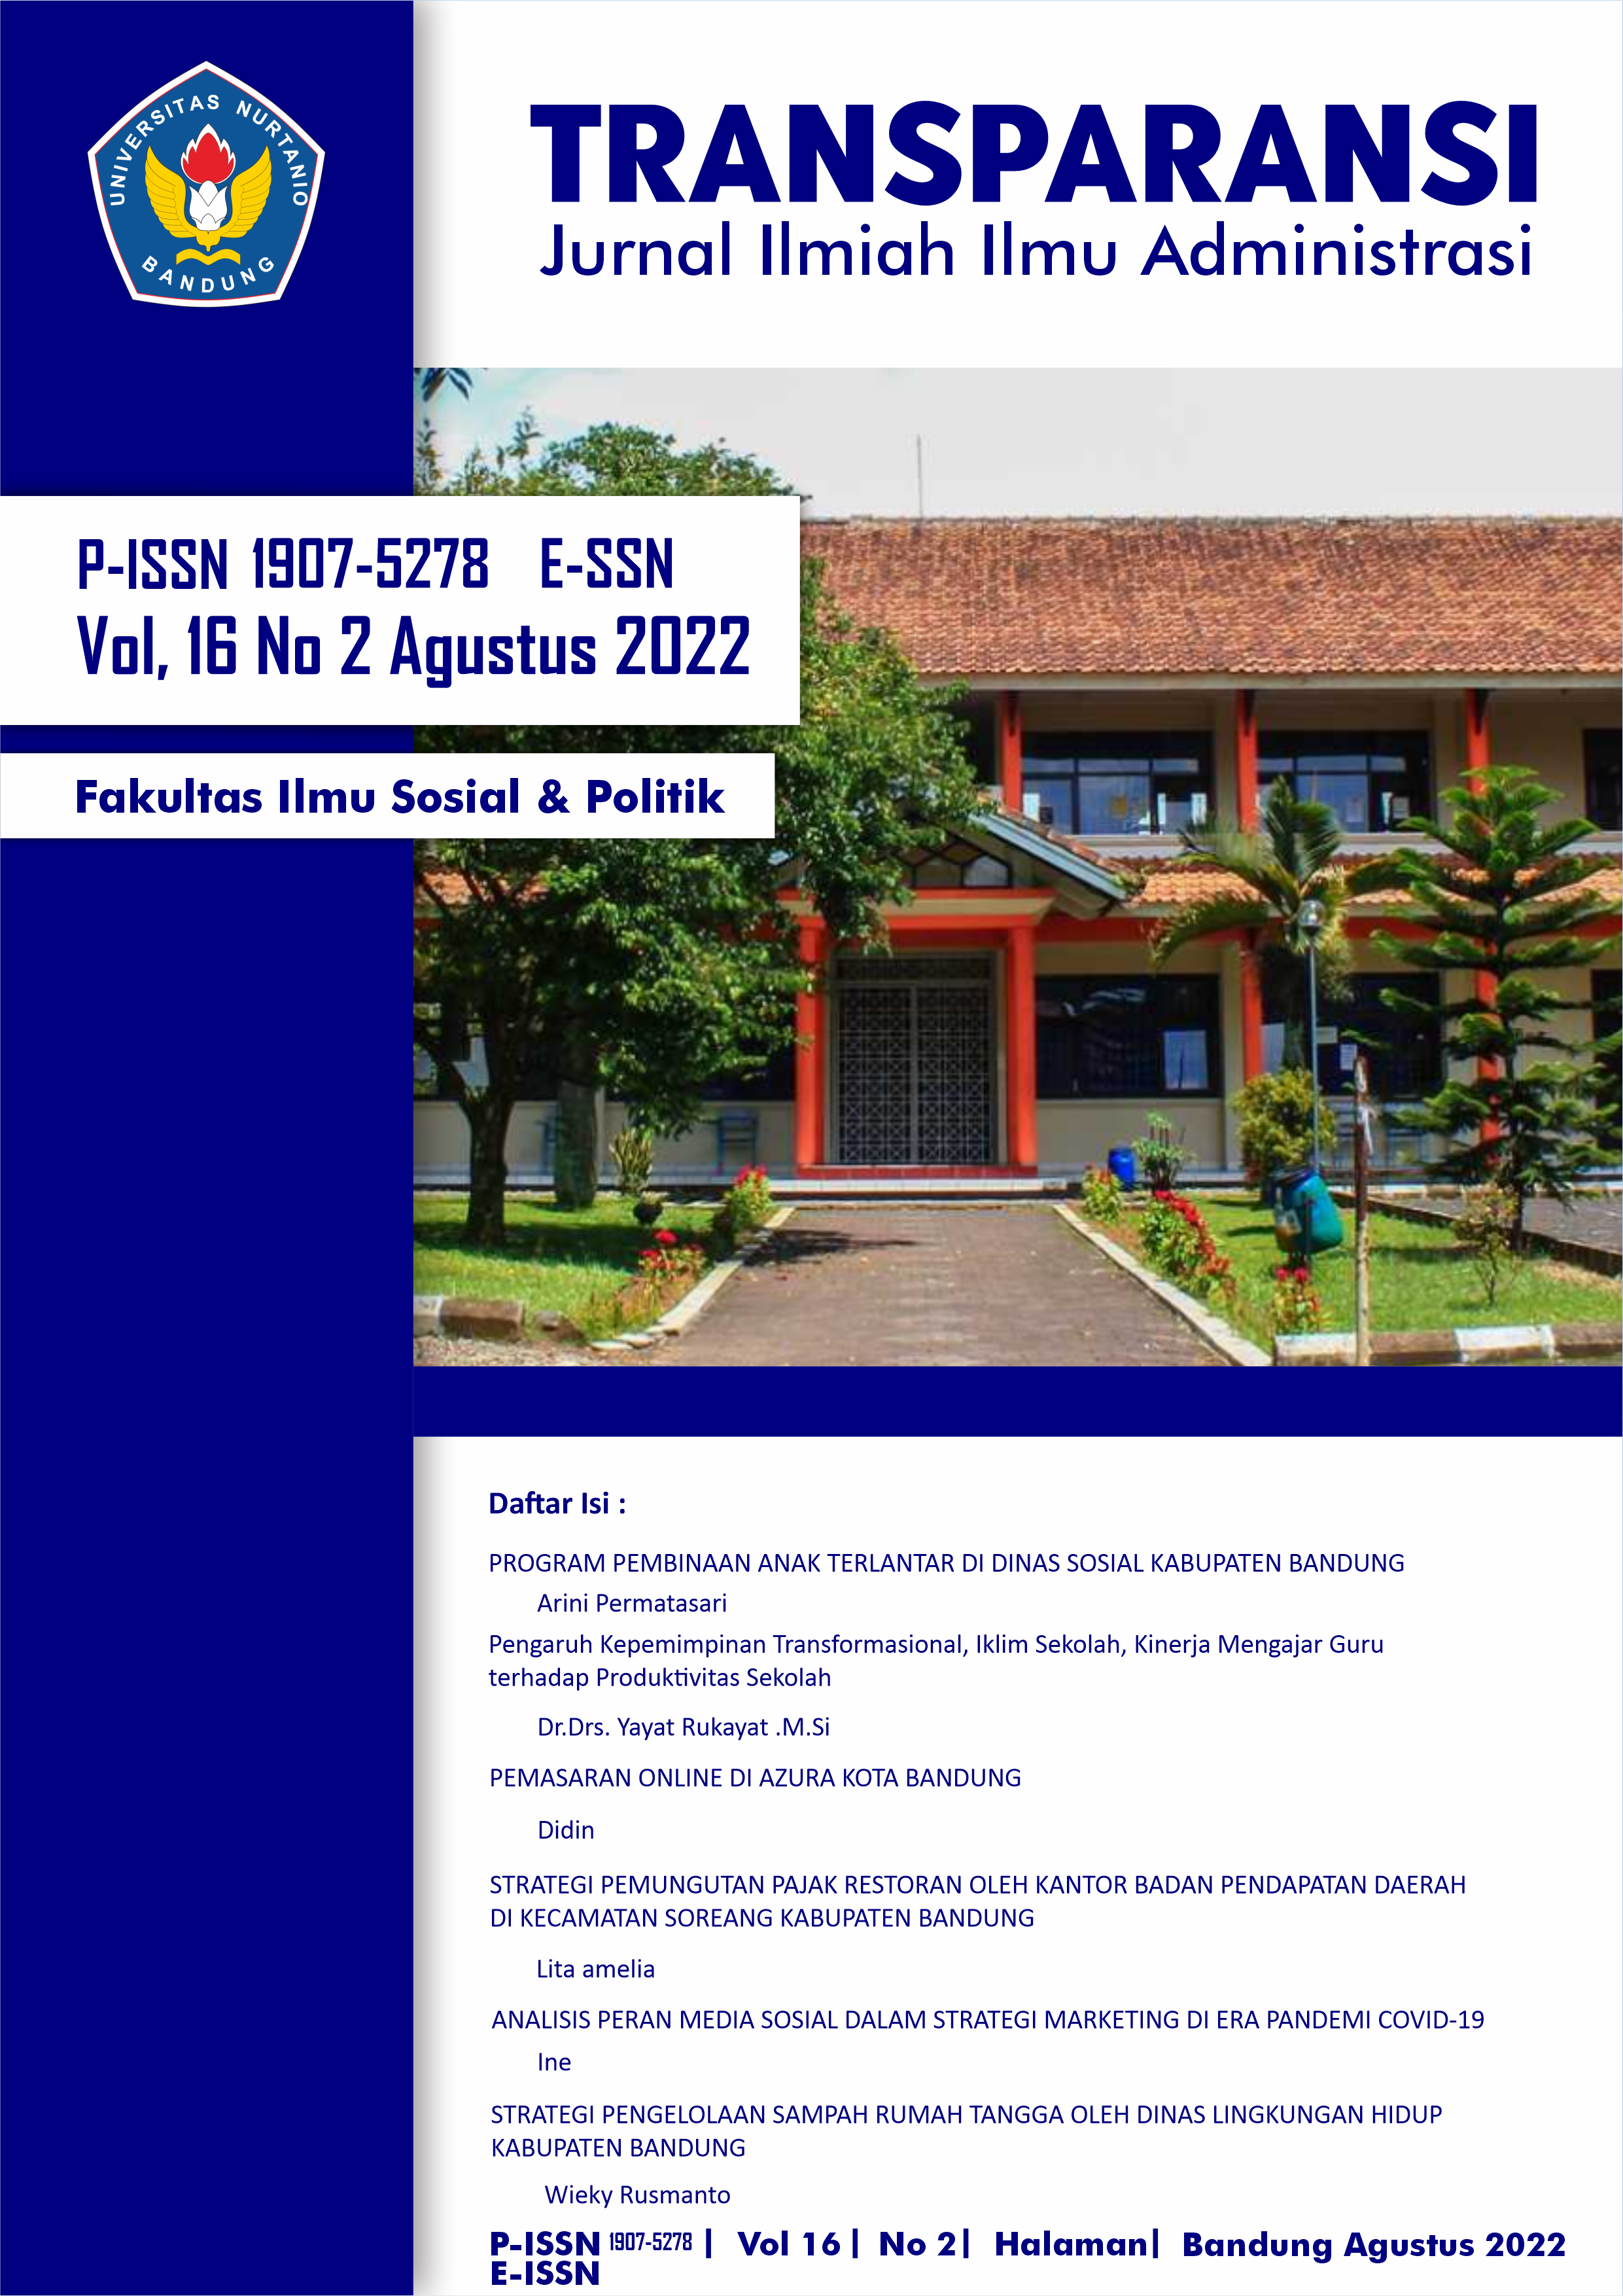 					Lihat Vol 16 No 2 (2022): TRANSPARANSI Jurnal Ilmu Administrasi
				